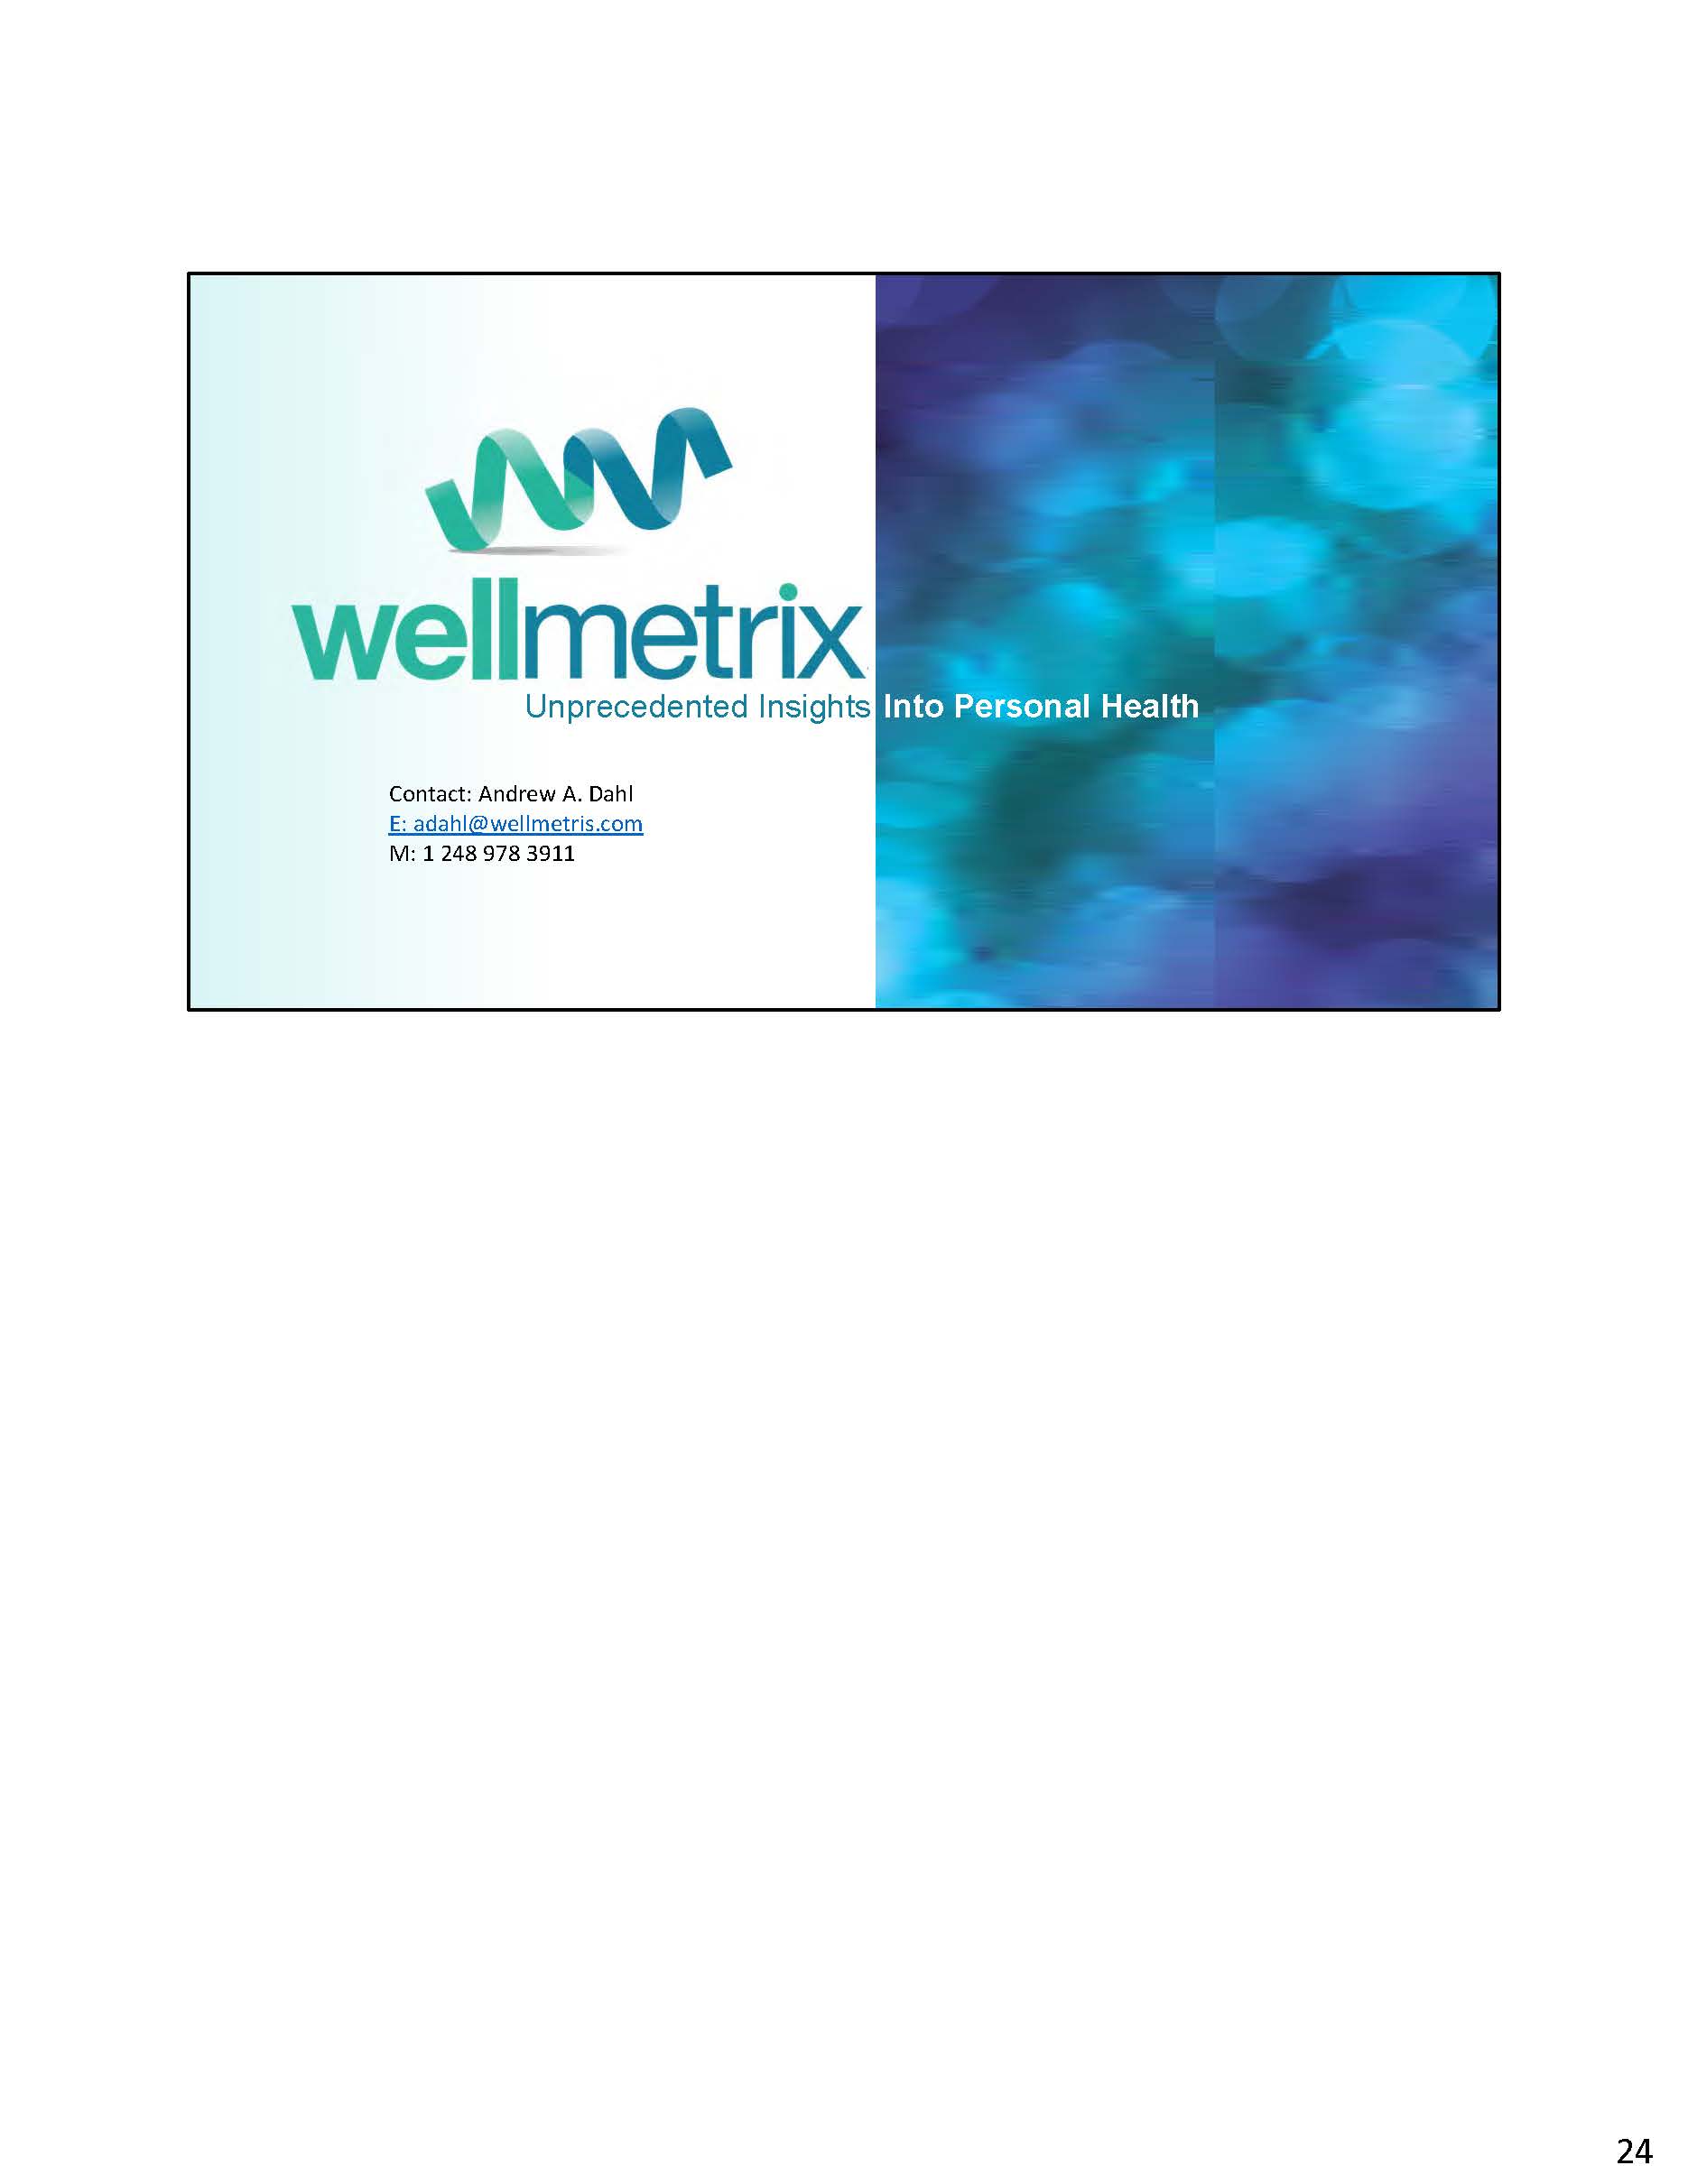 WellMetrix Jan 10 2018 Exhibitv1_Page_24.jpg